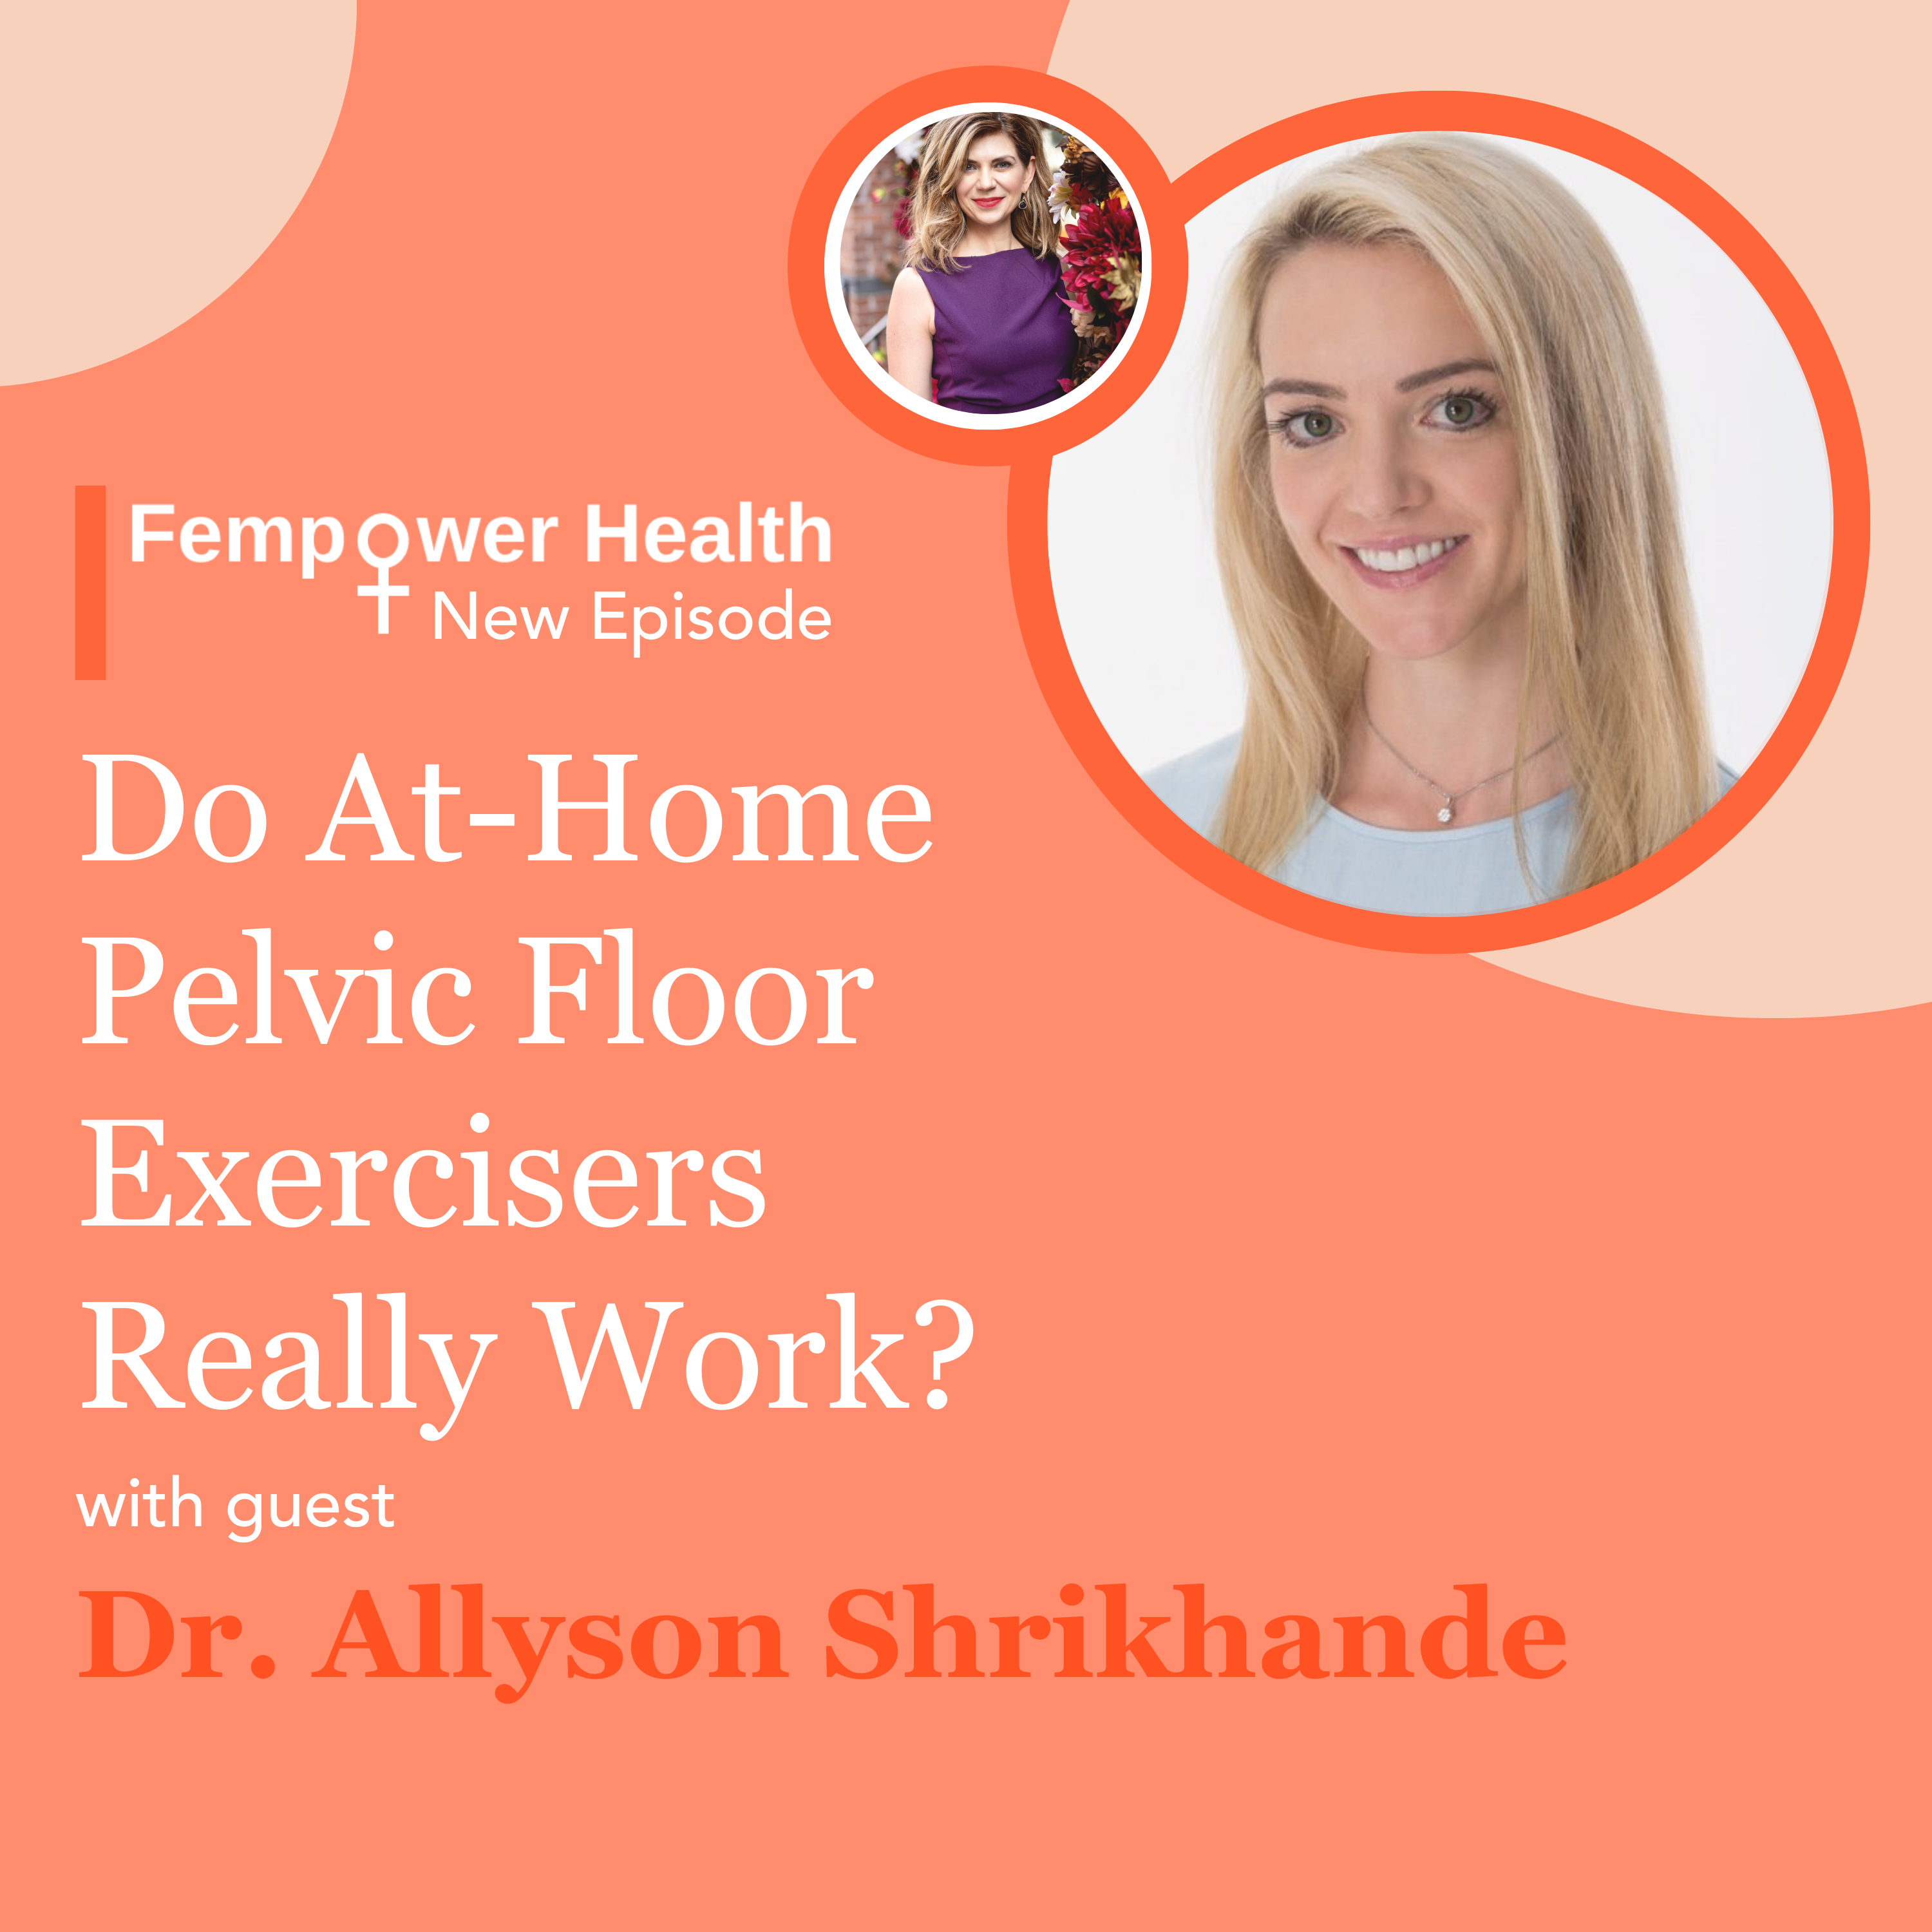 LISTEN AGAIN: Do At-Home Pelvic Floor Exercisers Really Work?